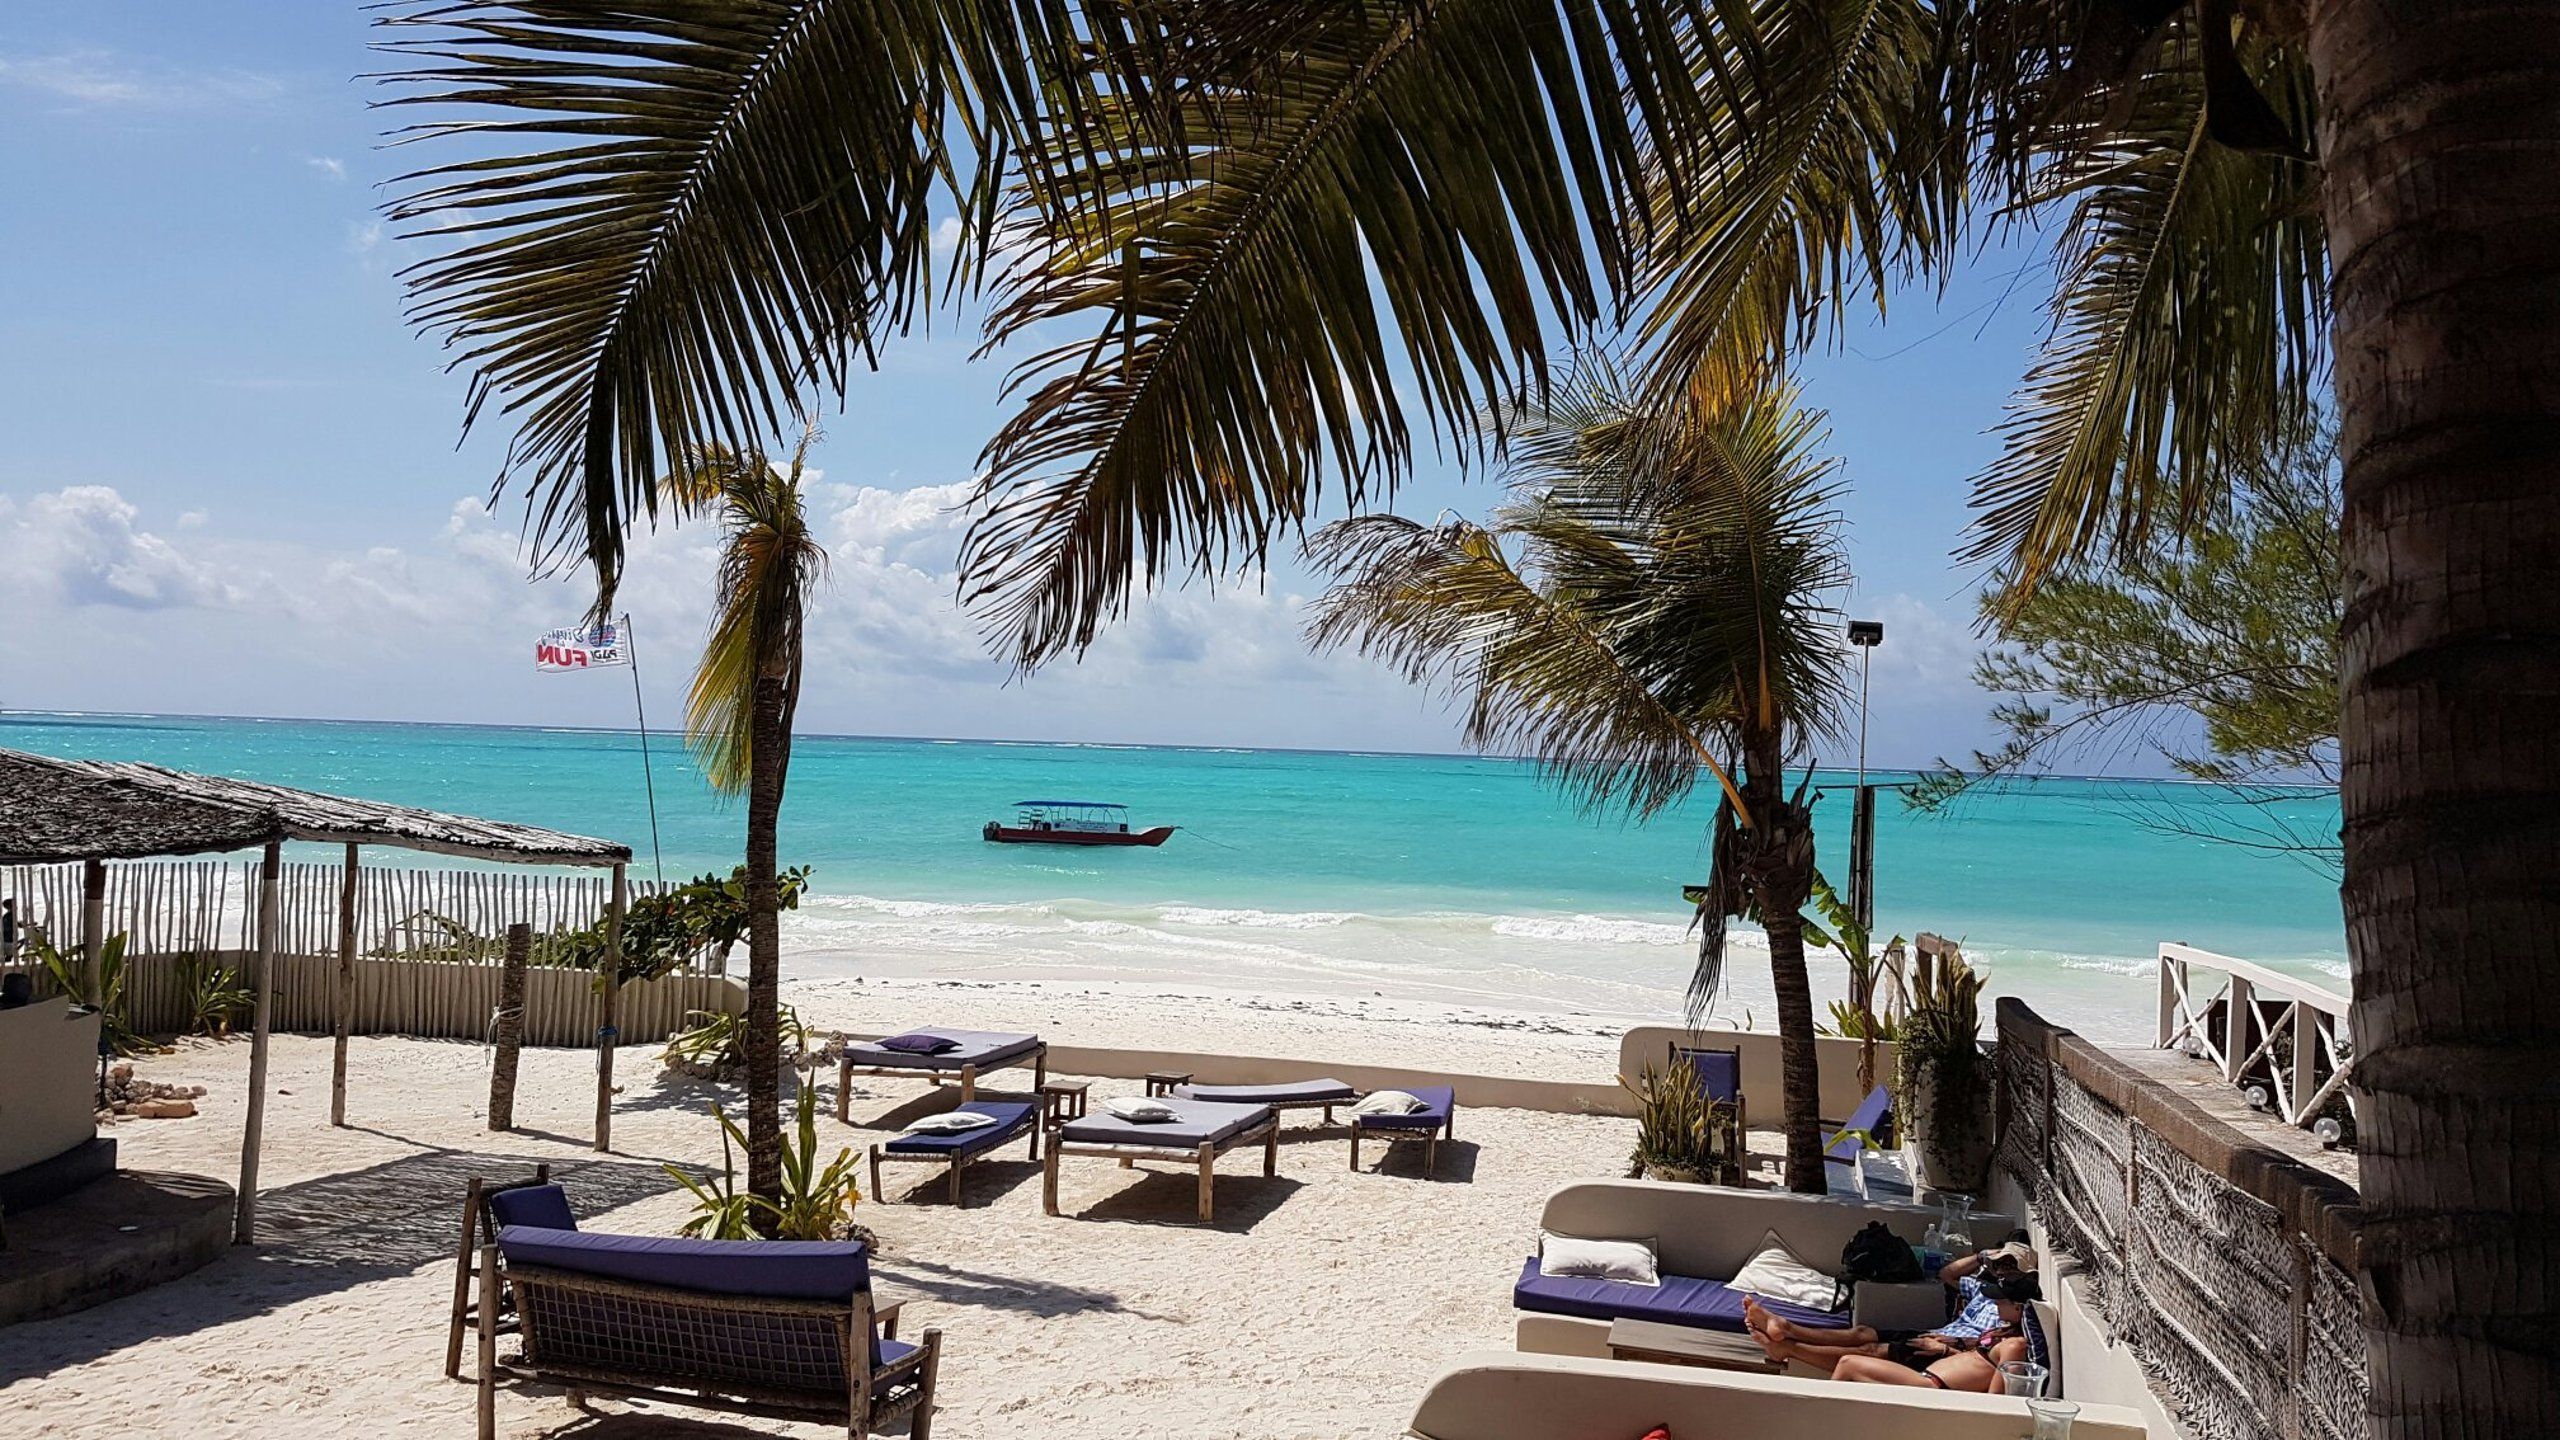 Zanzibar Island 2020: Best of Zanzibar Island Tourism